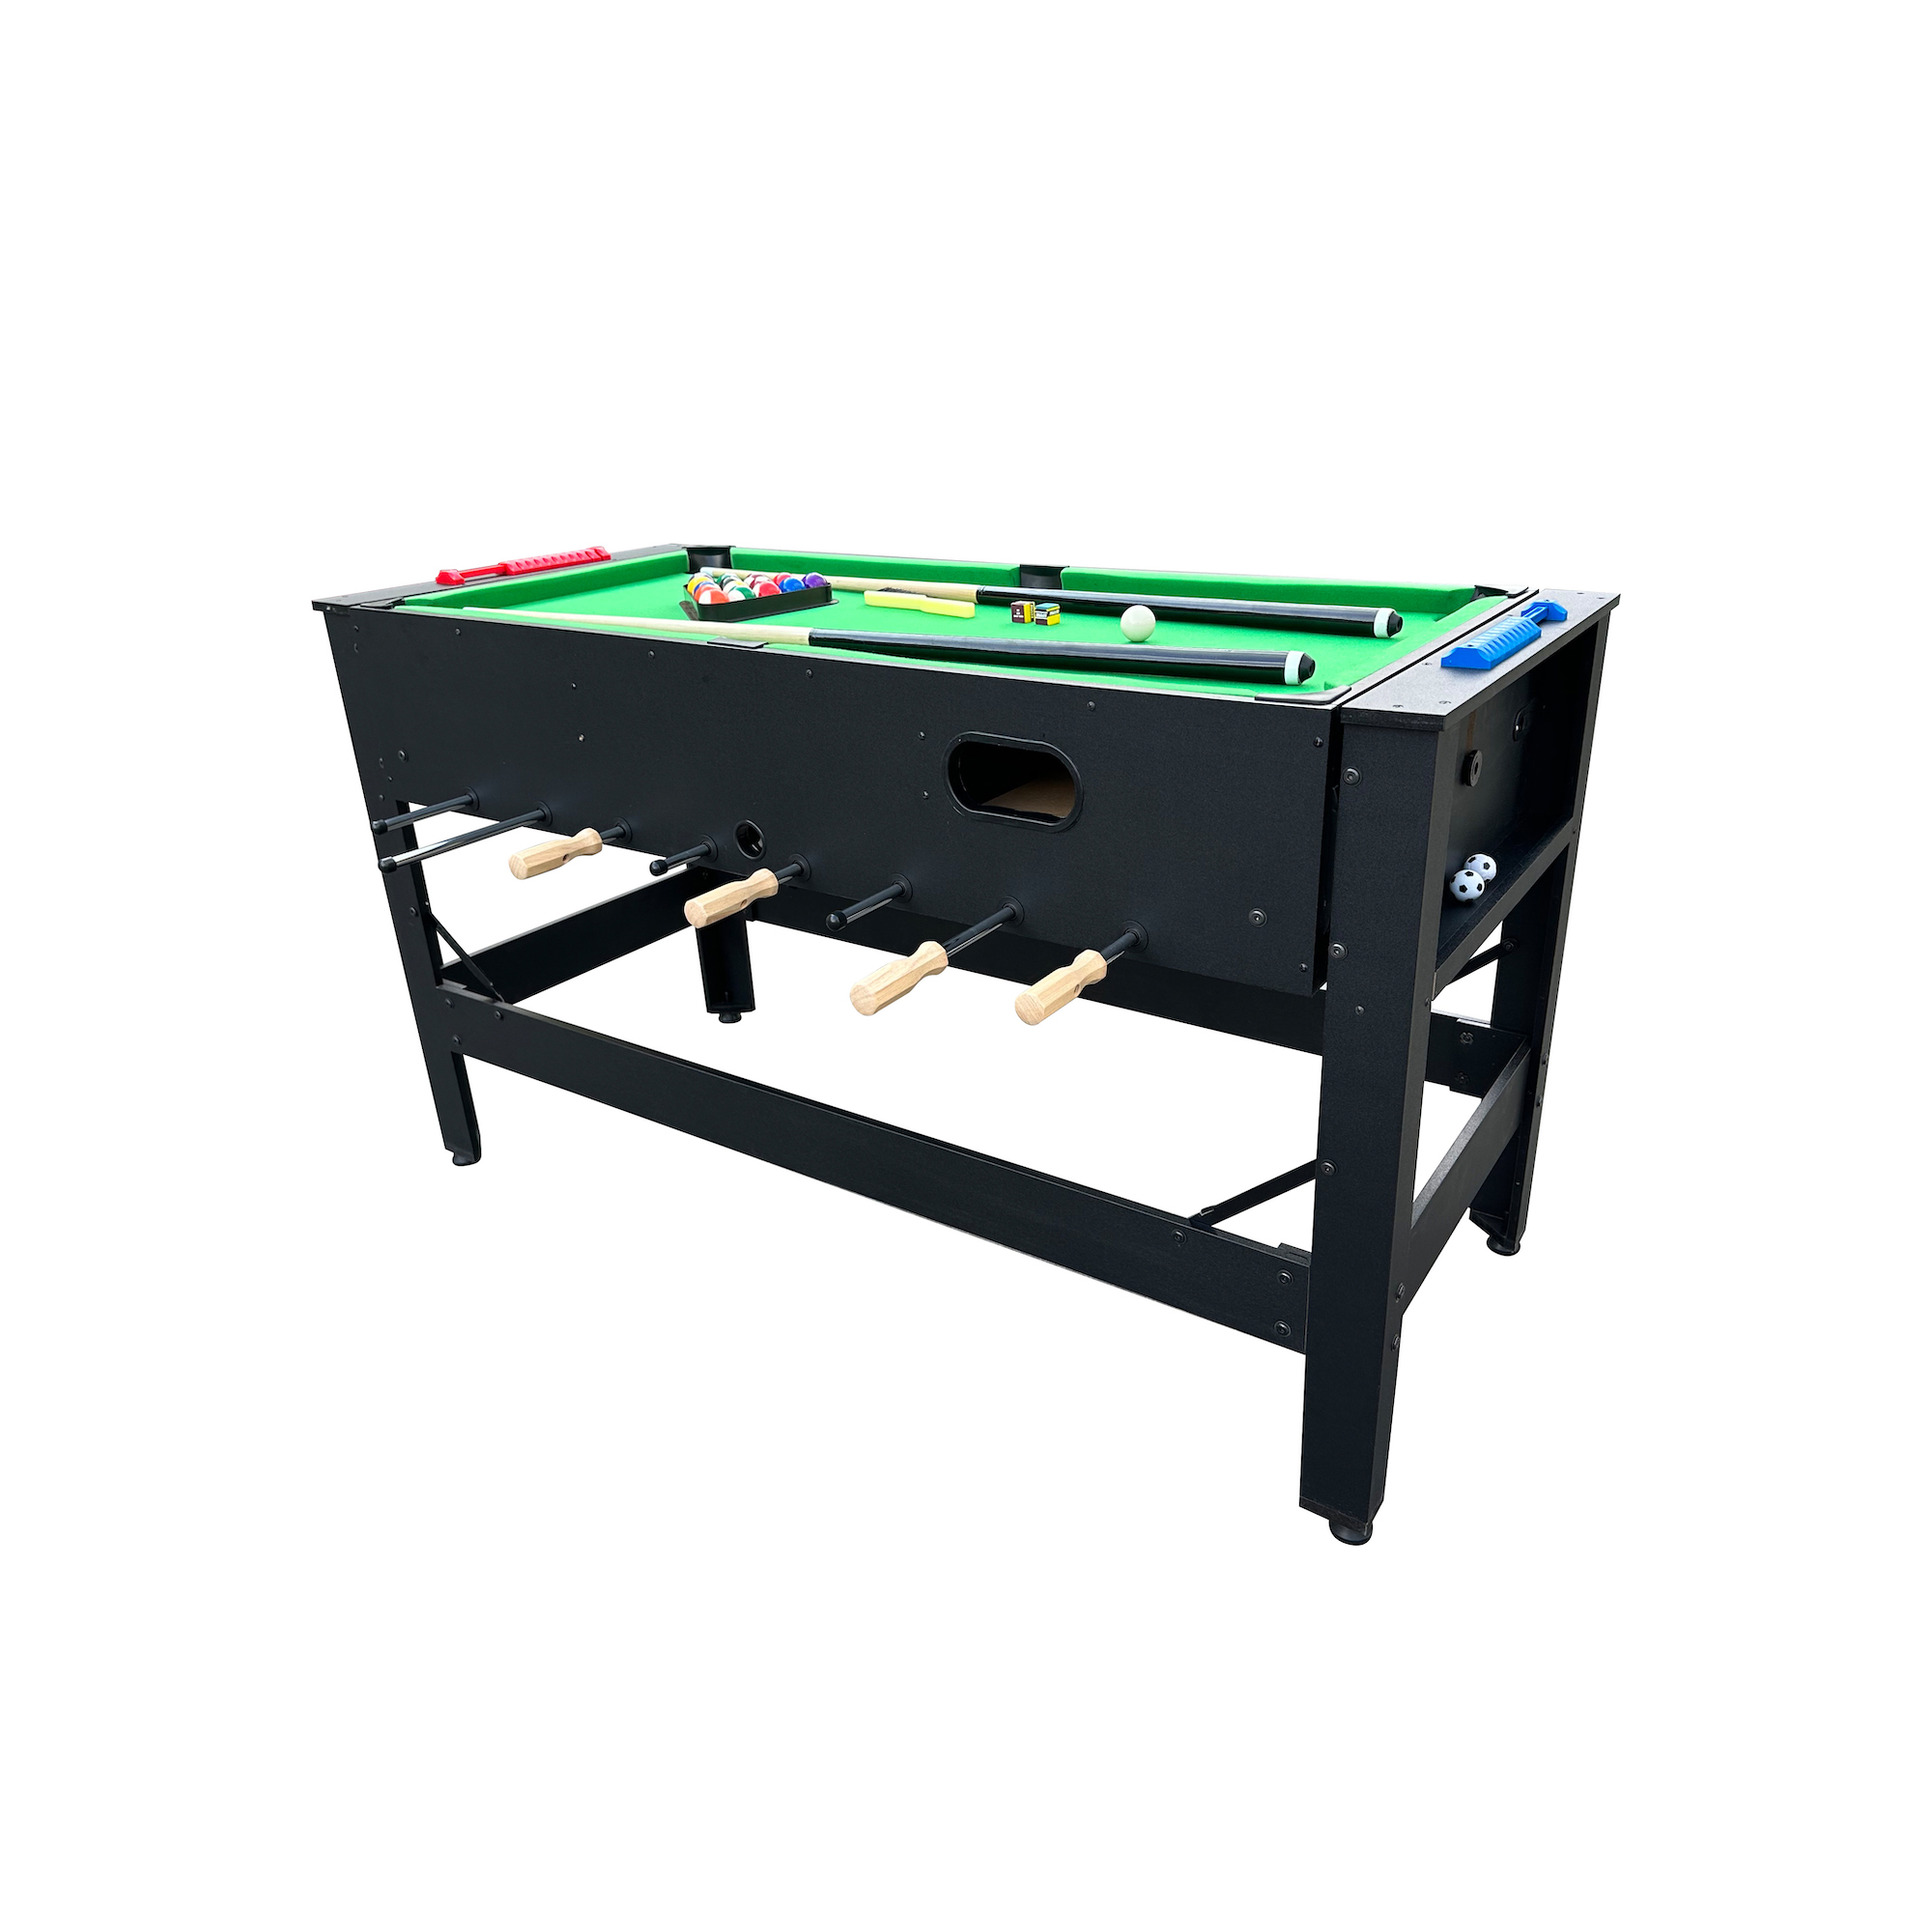 KICK Minotaur 48 5-in-1 Multi-Game Table (Black)